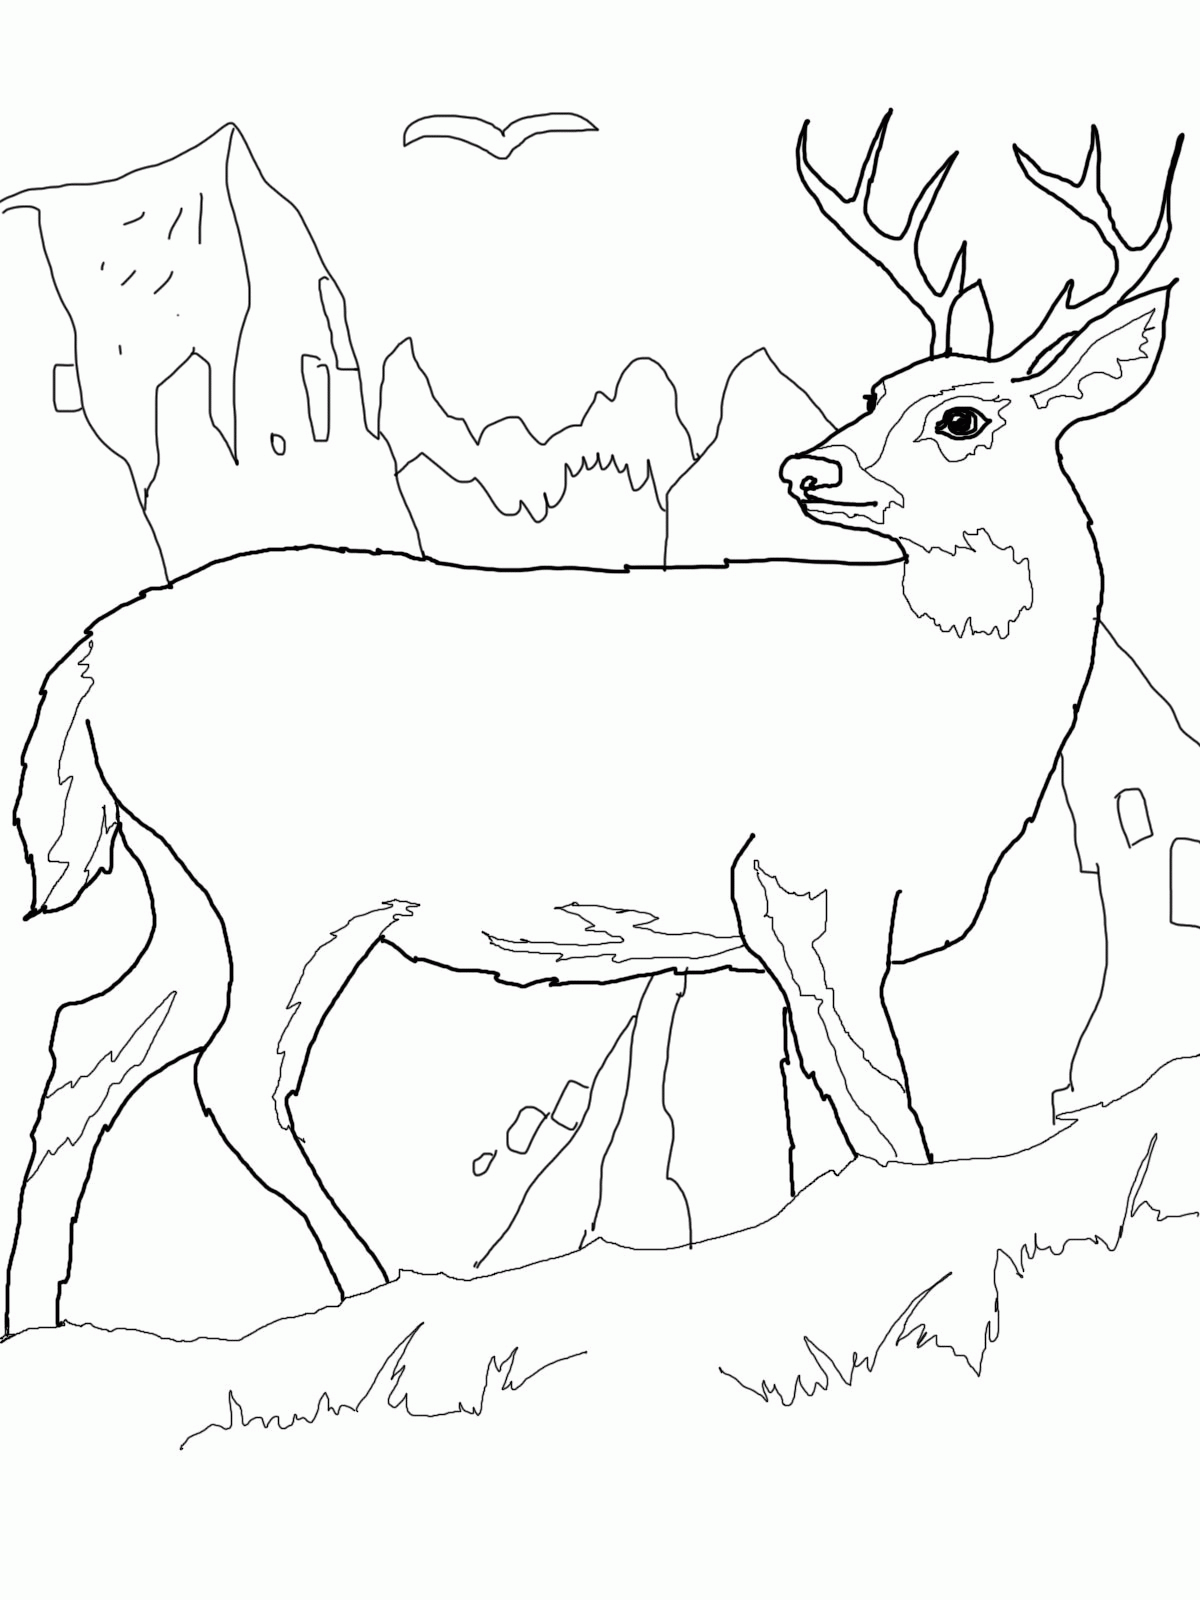 free-deer-coloring-pages-printable-download-free-deer-coloring-pages